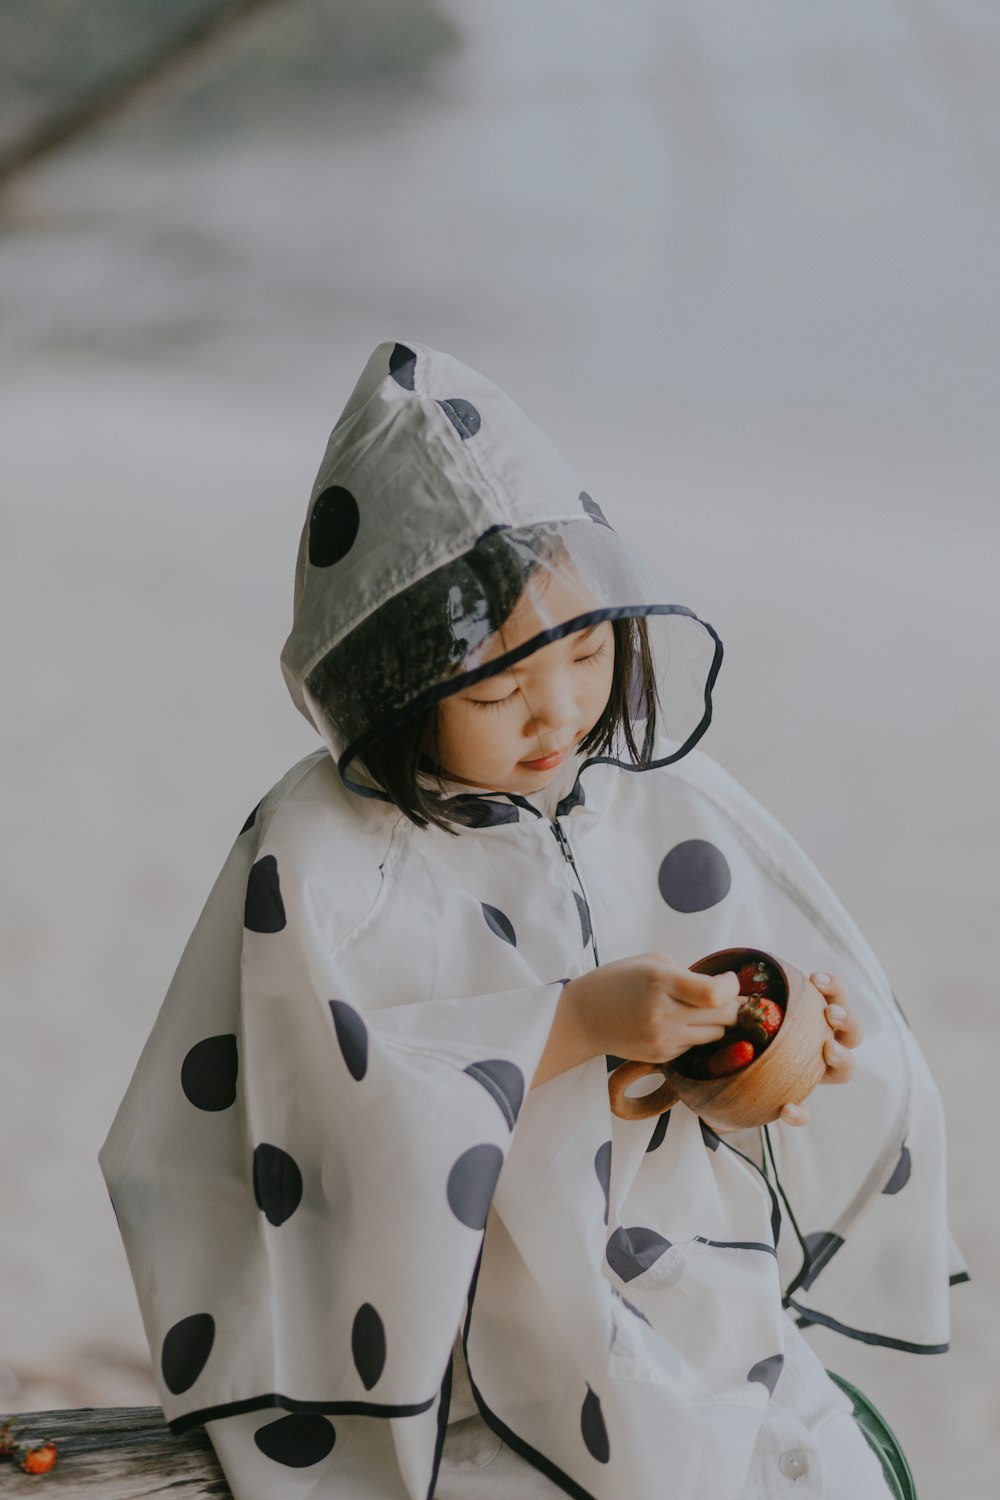 a little girl dressed in a polka dot raincoat